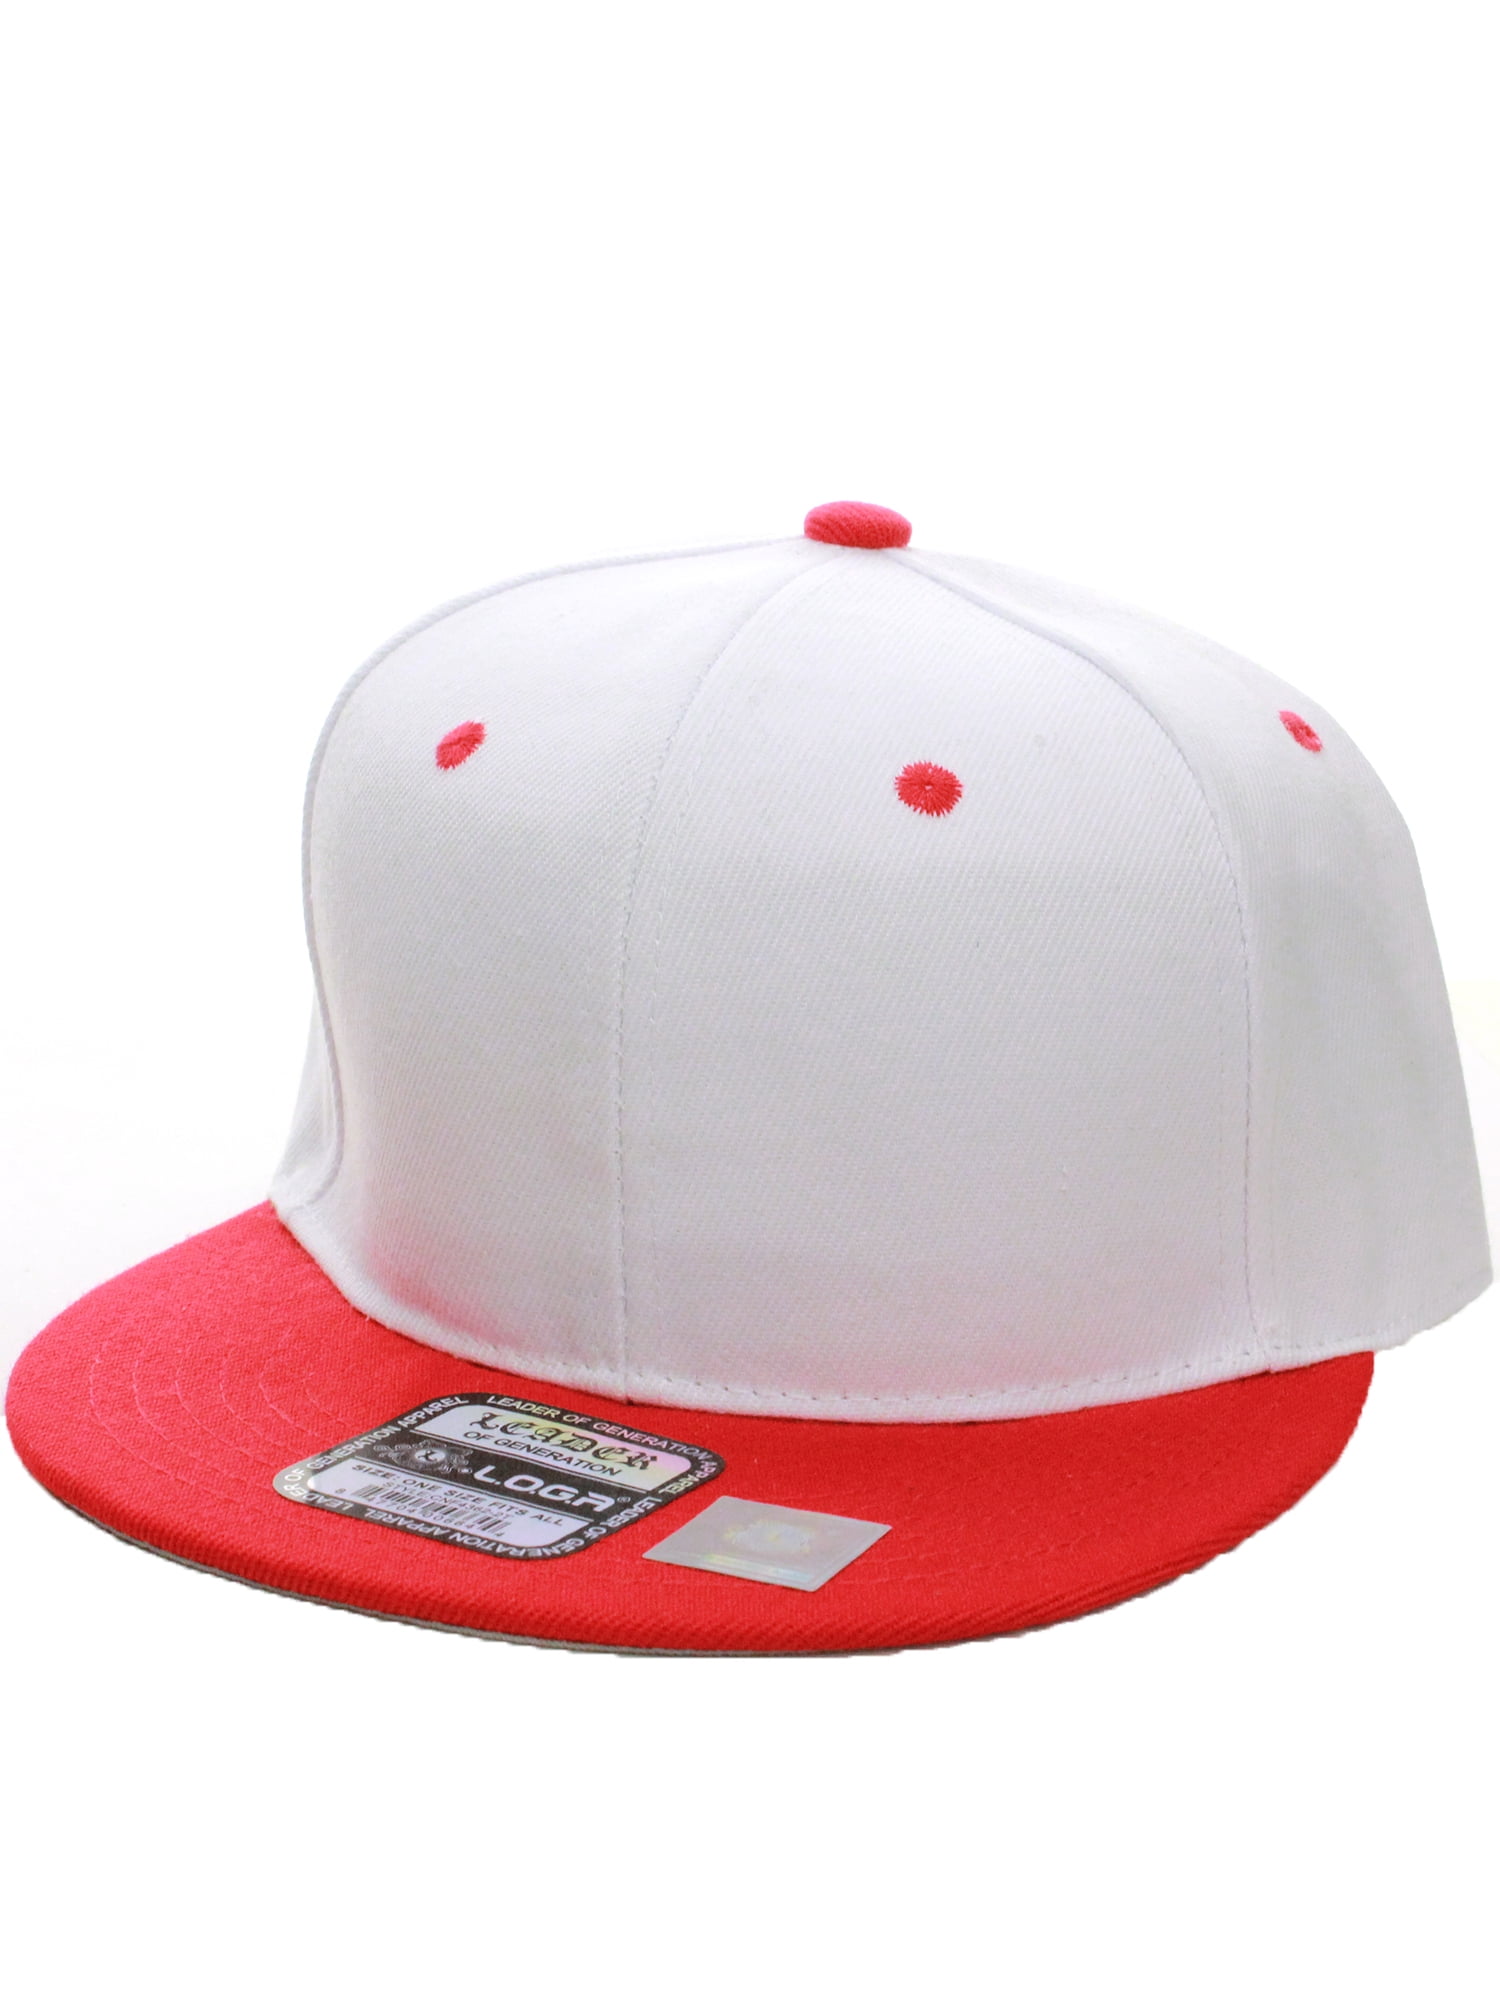 L.O.G.A. Plain Adjustable Snapback Hats Caps Flat Bill Visor - White Red